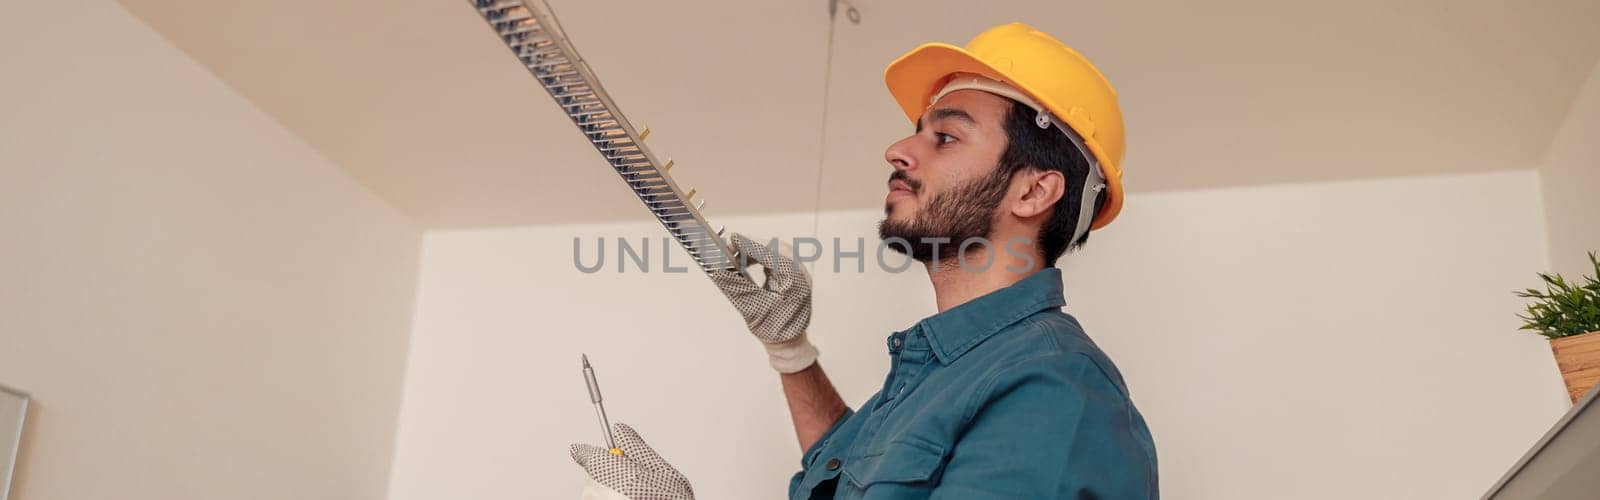 Professional electrician worker in uniform is installing electric lamps light in kitchen by Yaroslav_astakhov